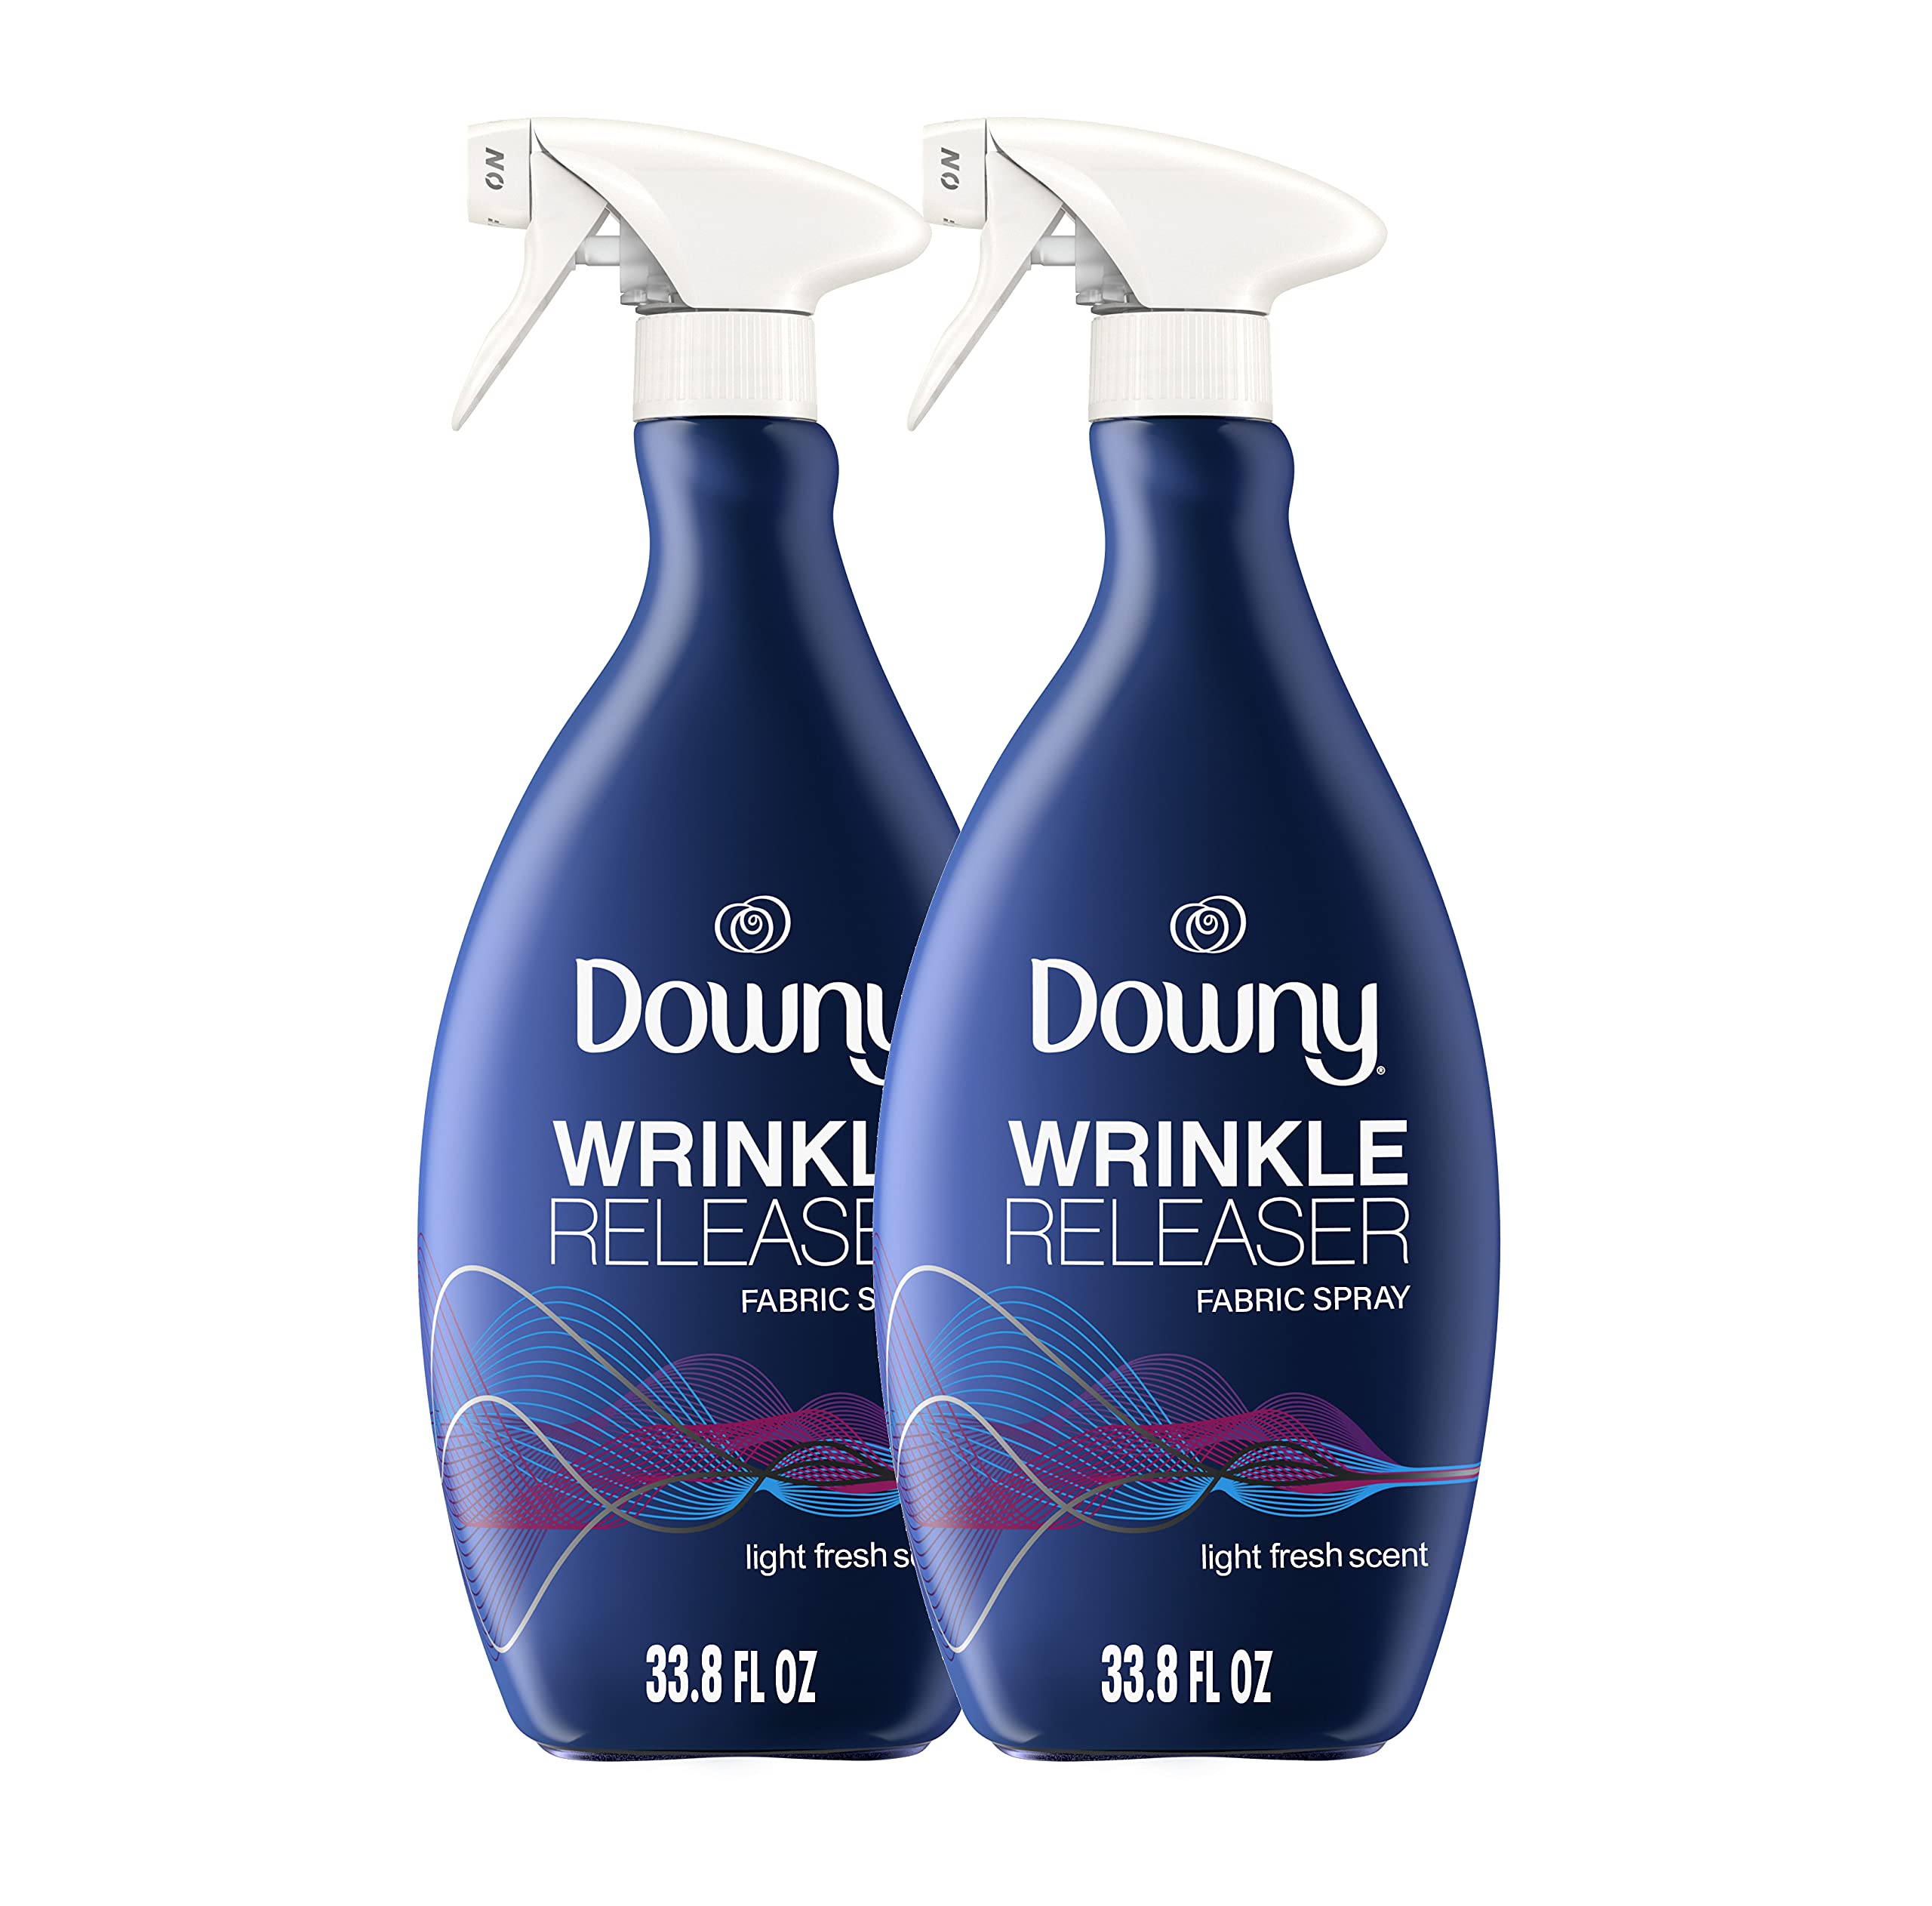 Downy Wrinkle Releaser Fabric Spray, Light Fresh Scent,33.8 Fl Oz (Pack of 2)